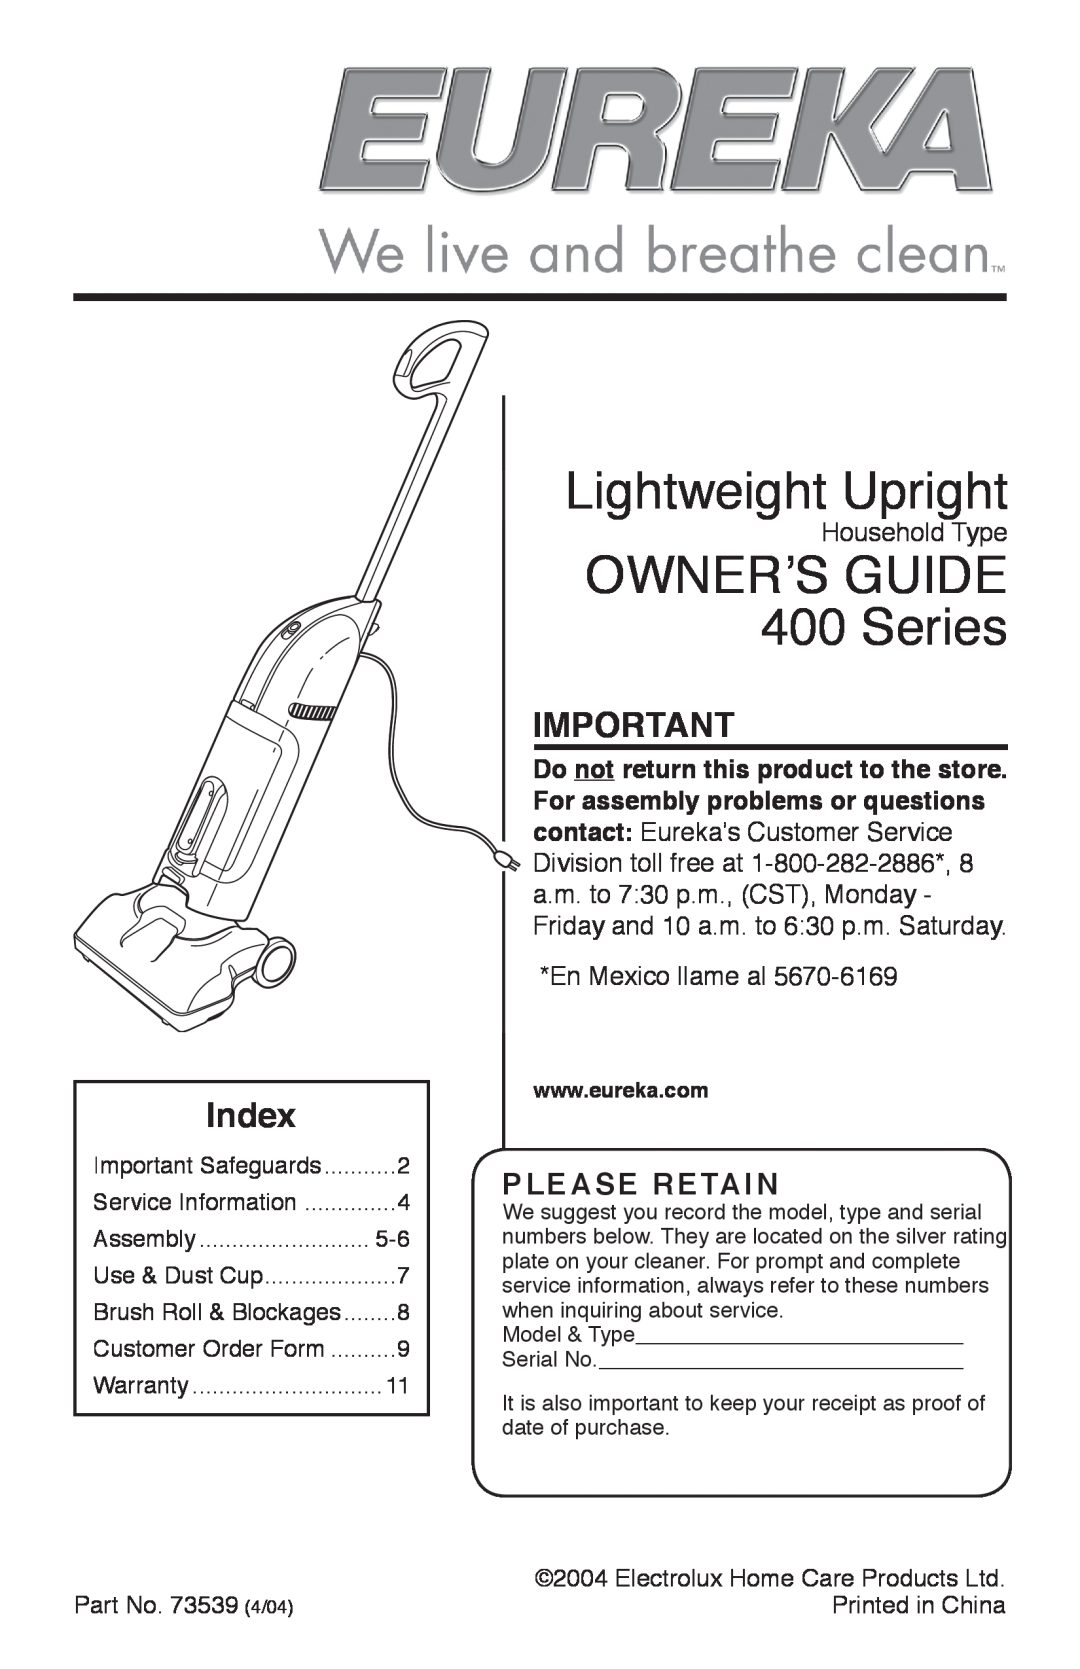 Eureka warranty Lightweight Upright, OWNERʼS GUIDE 400 Series, Index, Please Retain, Household Type, En Mexico llame al 